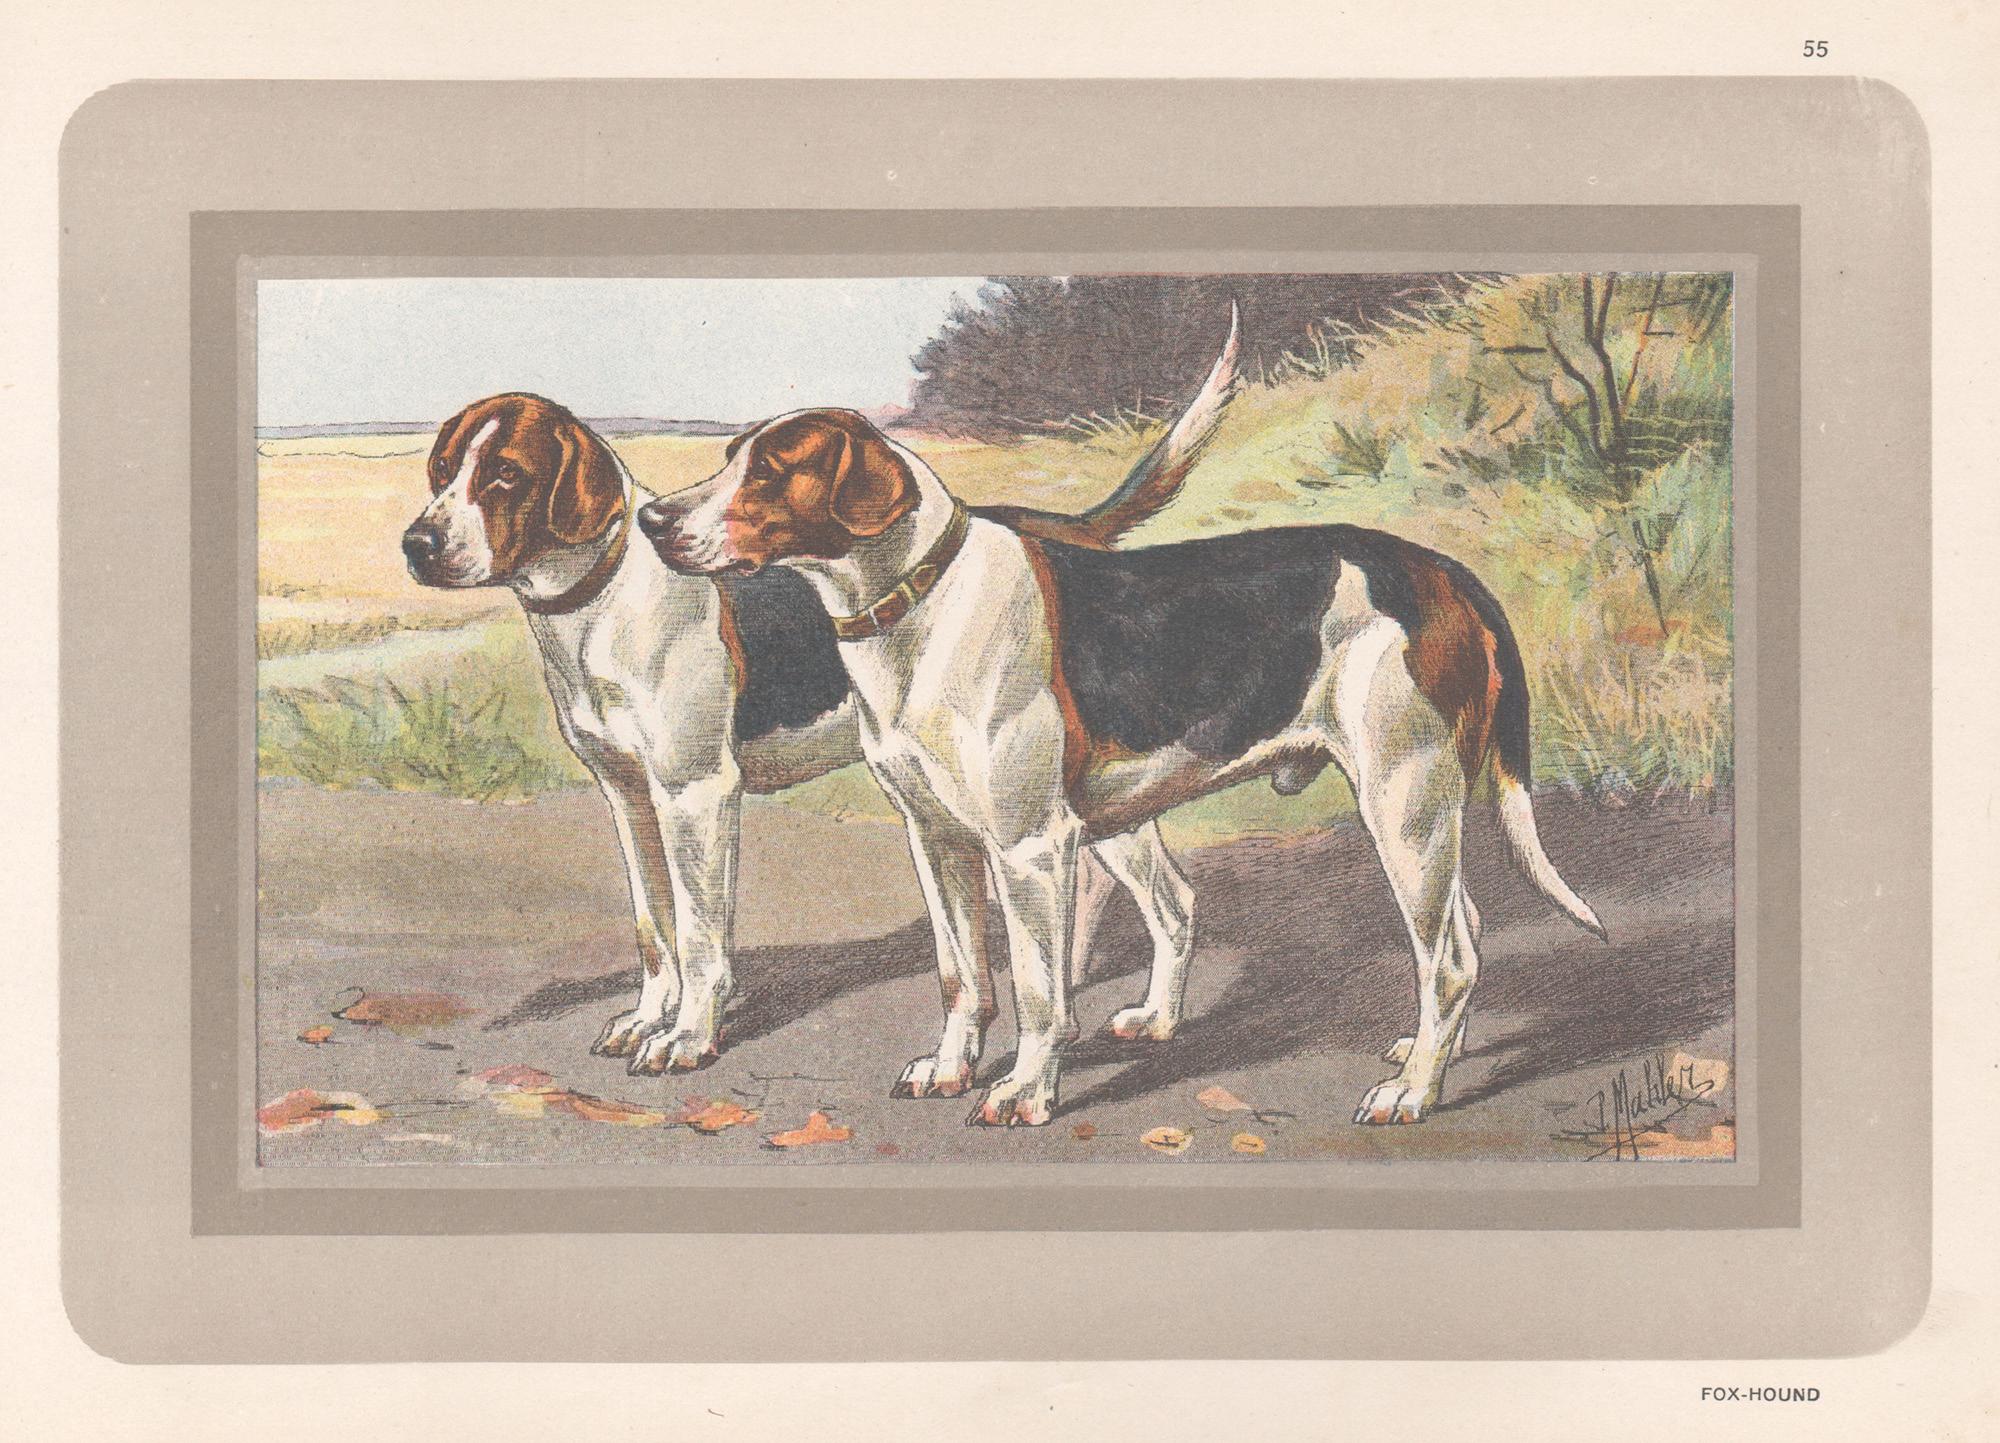 P. Mahler Animal Print - Fox Hound, French hound dog chromolithograph print, 1931